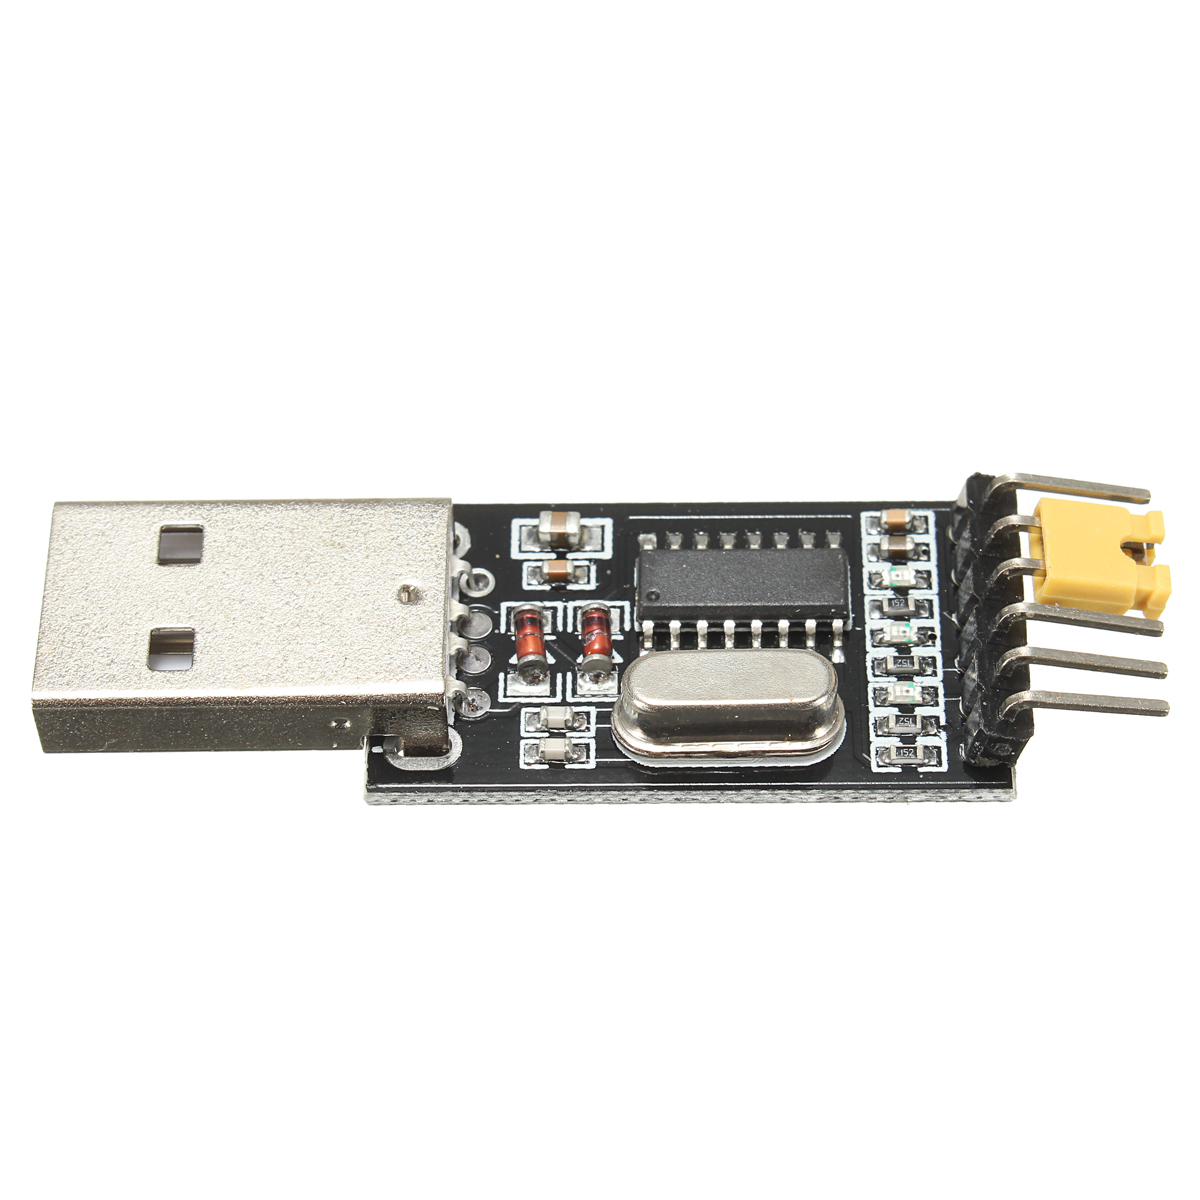 5pcs-33V-5V-USB-to-TTL-Convertor-CH340G-UART-Serial-Adapter-Module-STC-1314966-5